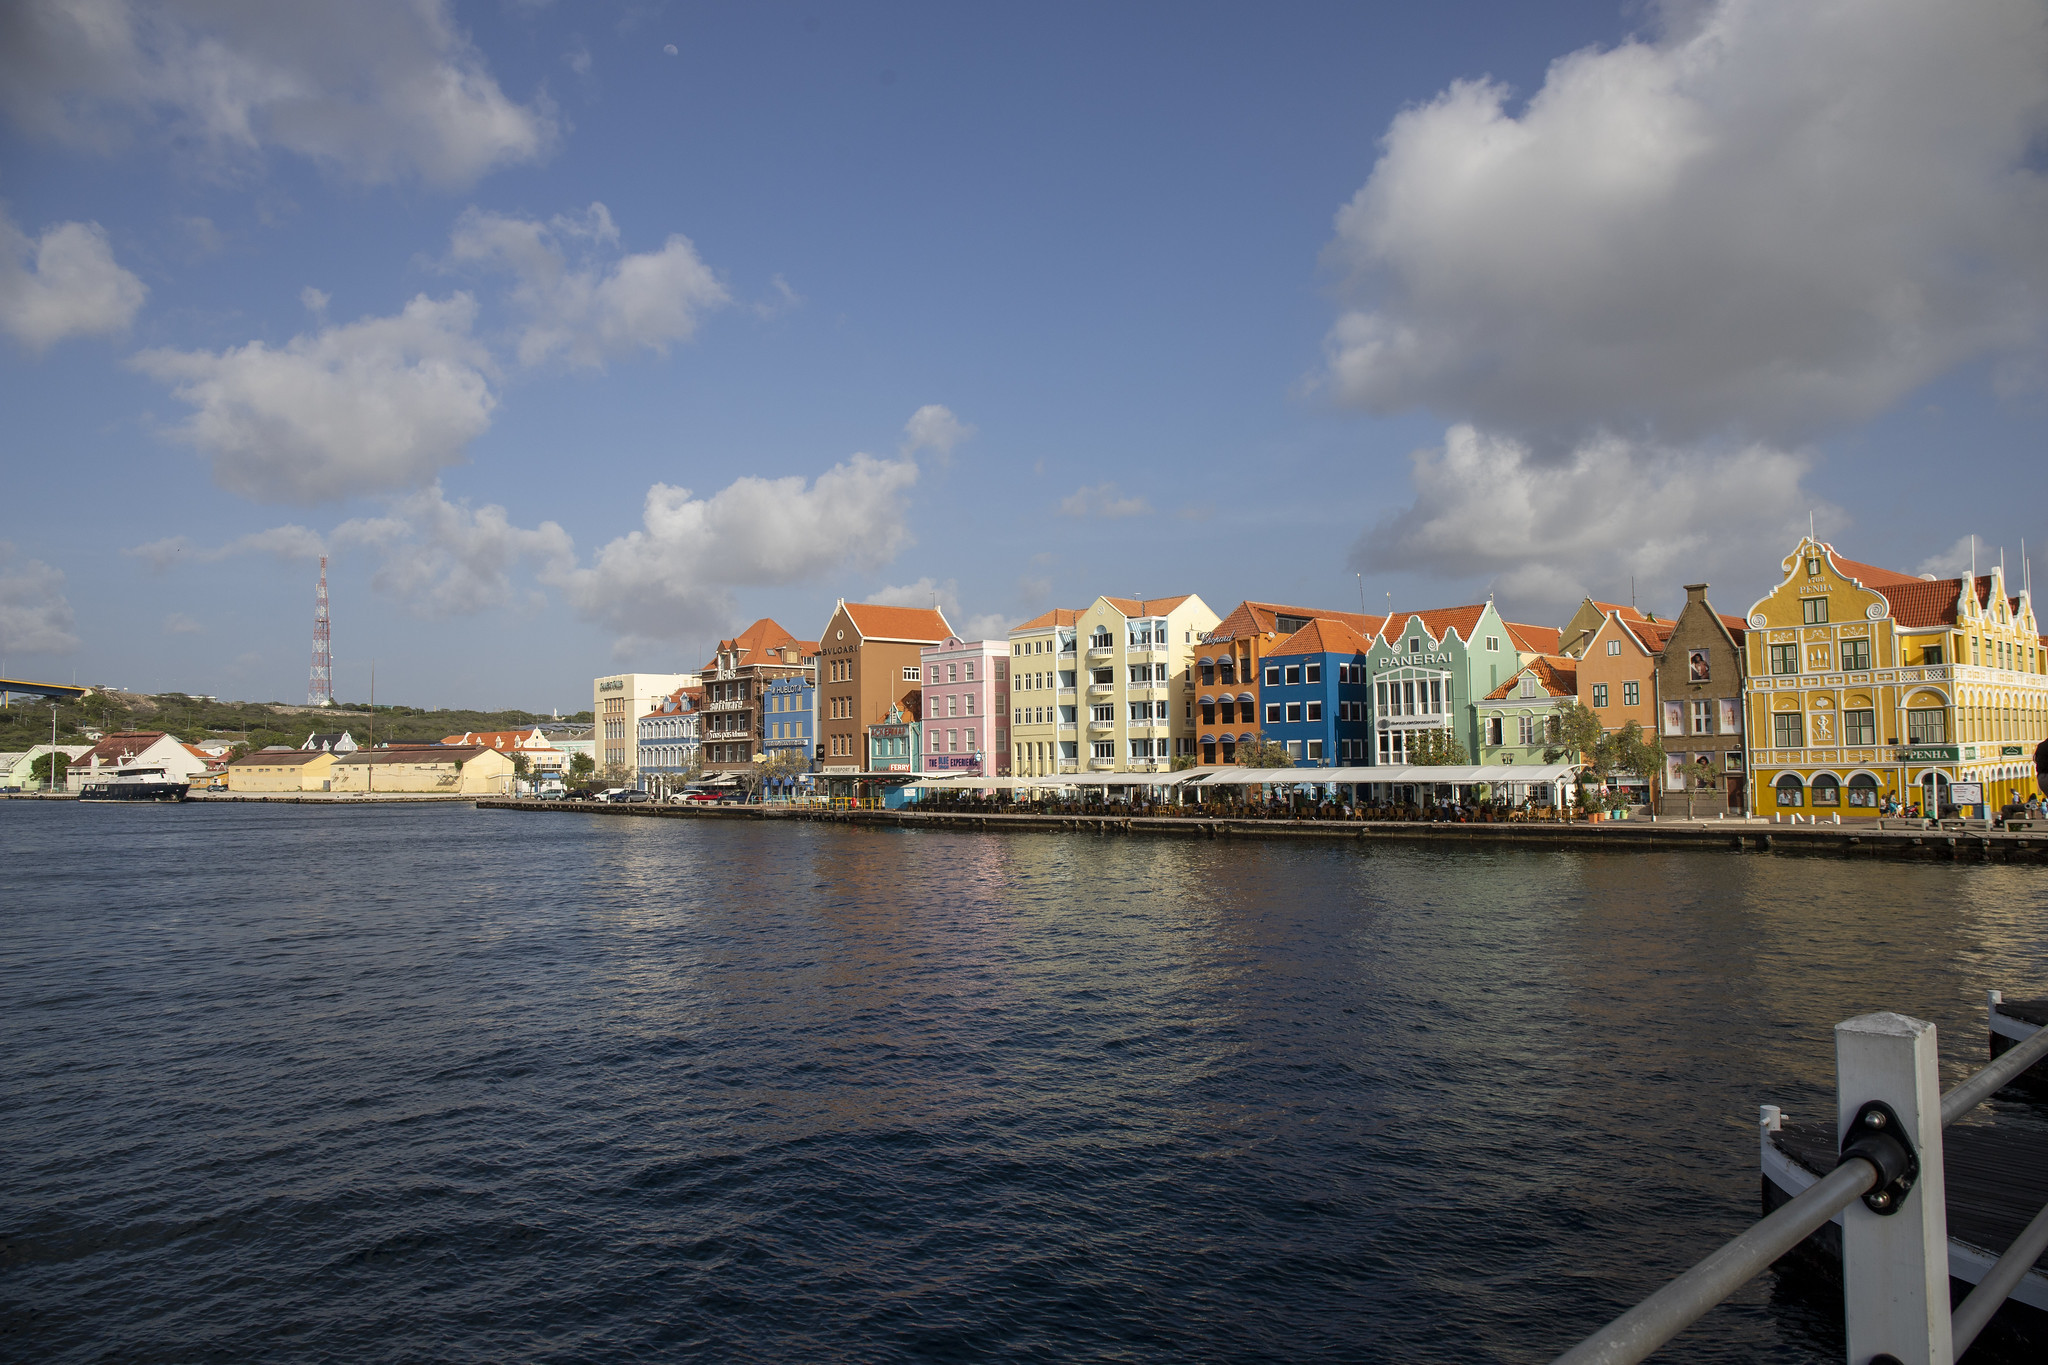 PJ2AFM Willemstad, Curacao Island